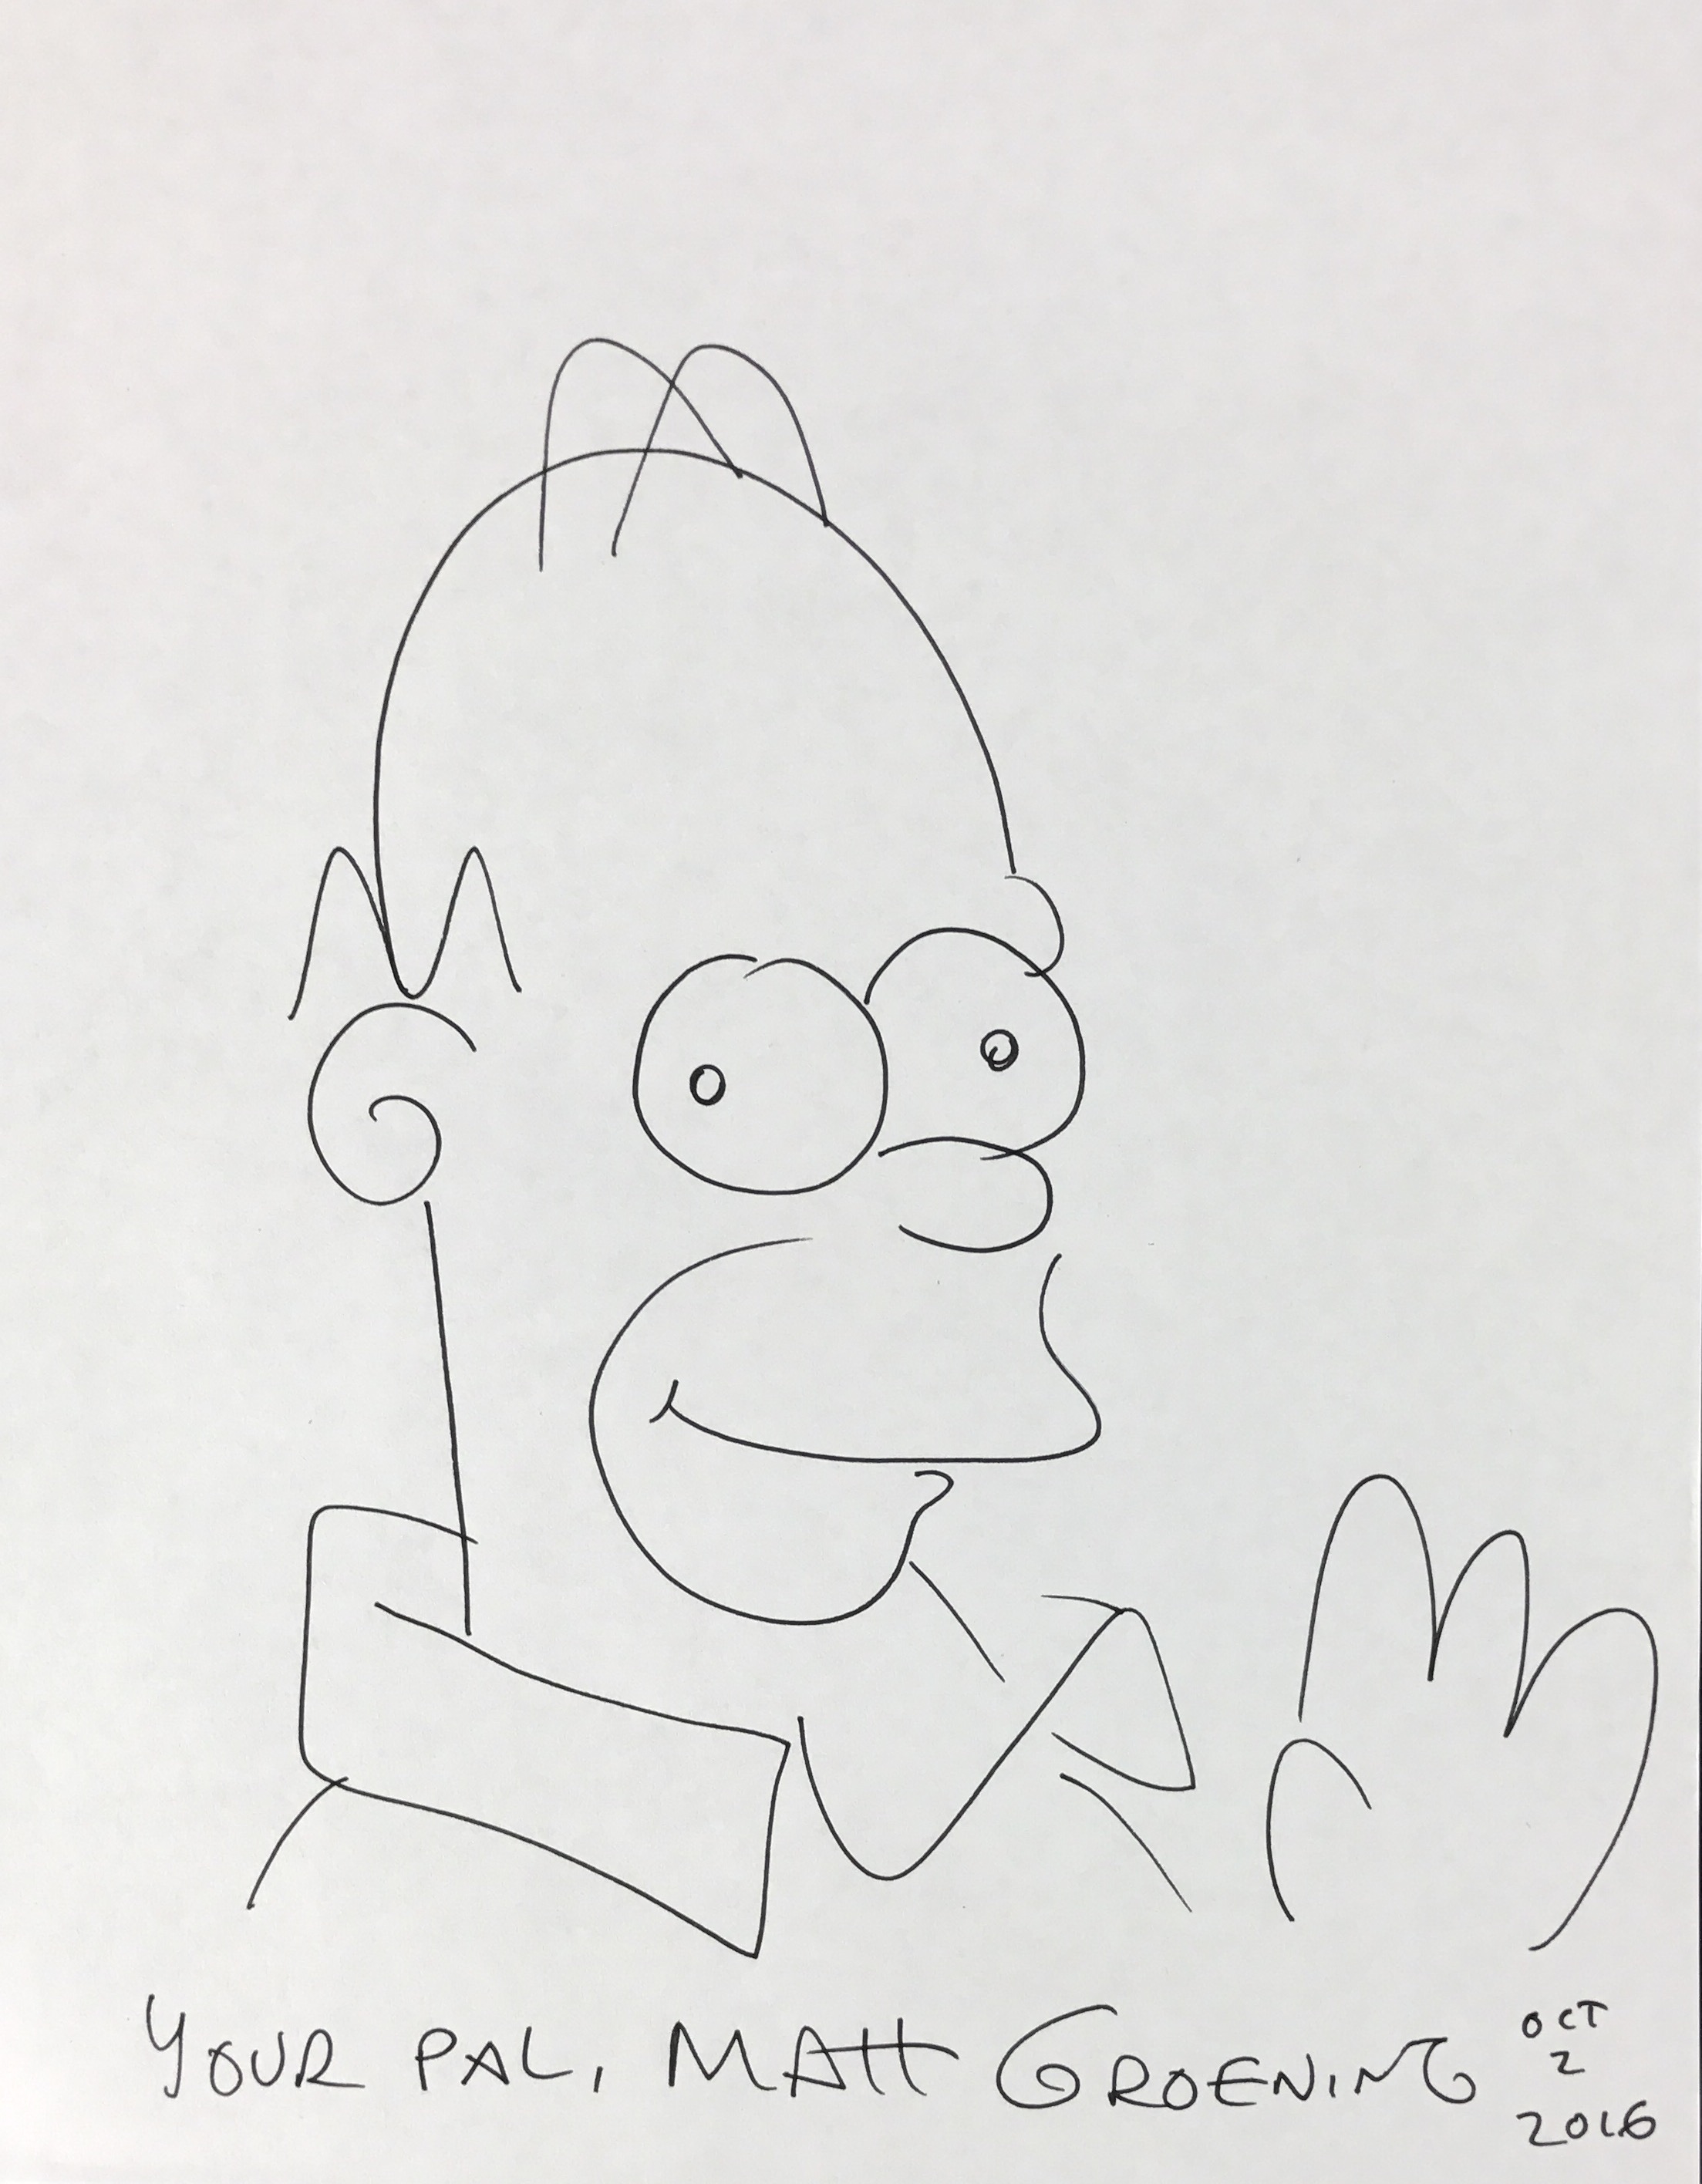  Matt Groening Original Simpsons Sketch Drawing for Adult